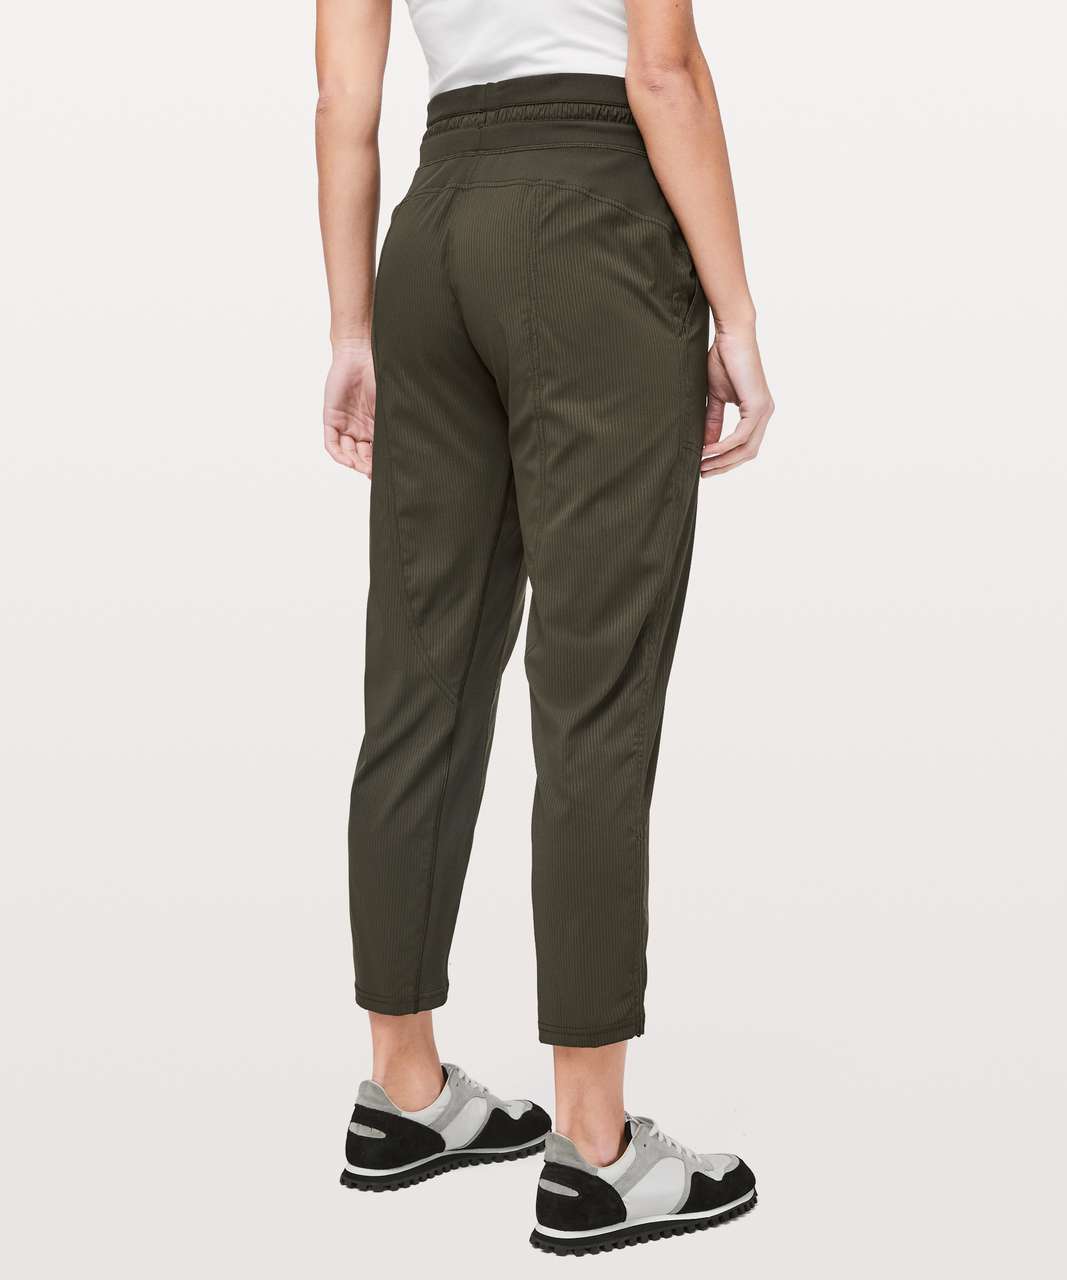 Lululemon Dance Studio Cropped Pants Green Size 4 - $55 (50